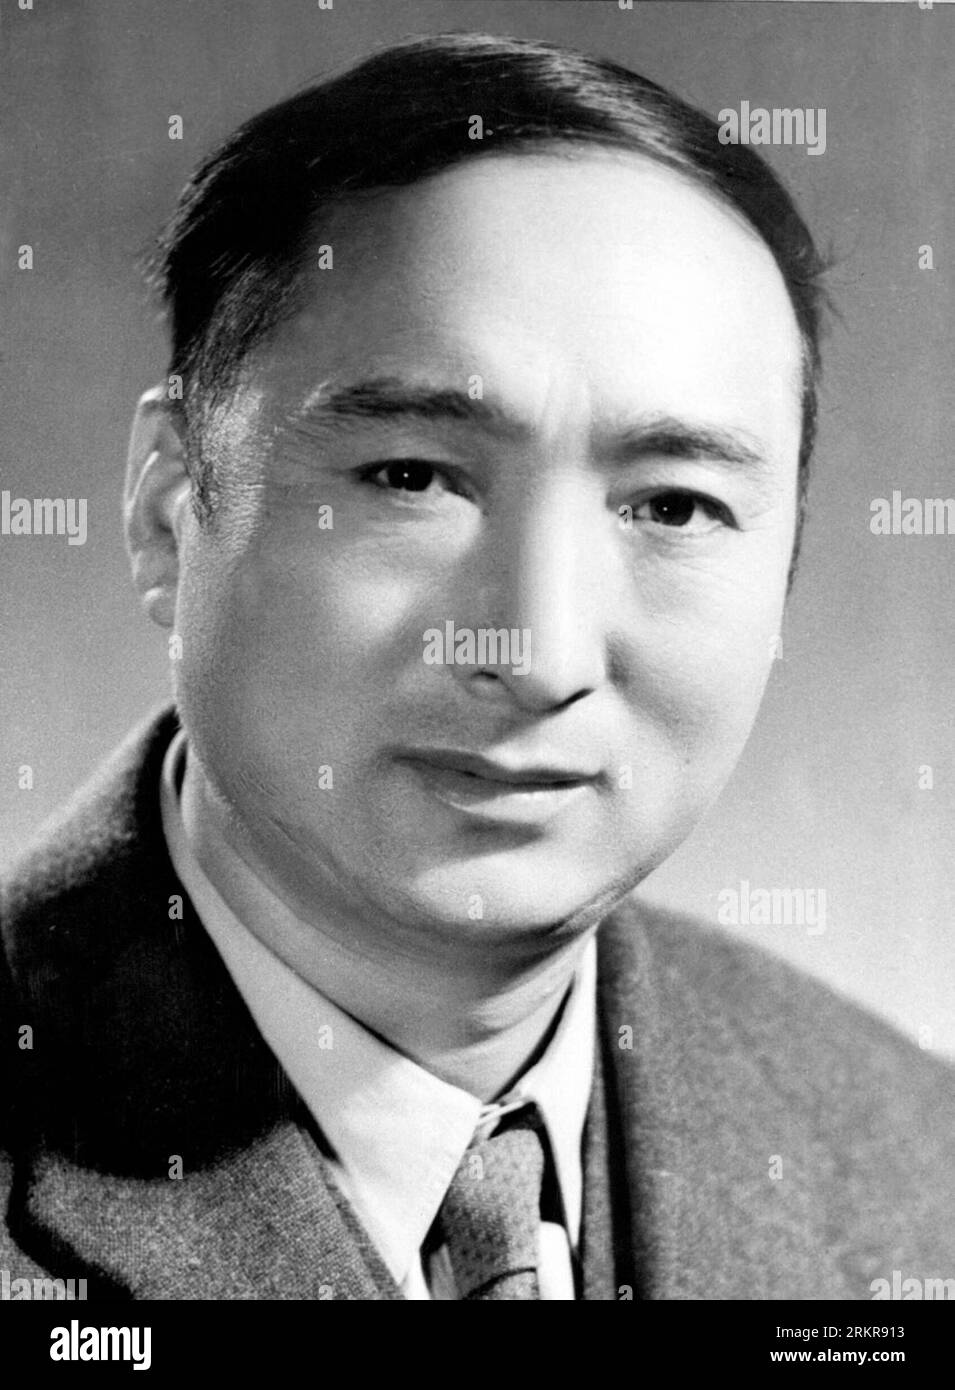 Bildnummer: 58154720 Datum: 27.06.1968 Copyright: Imago/Xinhua (120627) -- BEIJING, 27 de junio de 2012 (Xinhua) -- Foto de archivo sin fecha muestra un retrato del famoso actor chino Chen Qiang. Chen Qiang falleció a la edad de 94 años en Beijing, capital de China, el 26 de junio de 2012. (Xinhua) (llp) CHINA-BEIJING-CHEN QIANG-DEATH (CN) PUBLICATIONxNOTxINxCHN People Kultur Film xbs x2x 1968 hoch !AUFNAHMEDATUM GESCHÄTZT! 58154720 Fecha 27 06 1968 Copyright Imago XINHUA Beijing Junio 27 2012 XINHUA Foto de archivo sin fecha muestra un retrato del famoso actor chino Chen Qiang Chen Qiang falleció A la edad Foto de stock